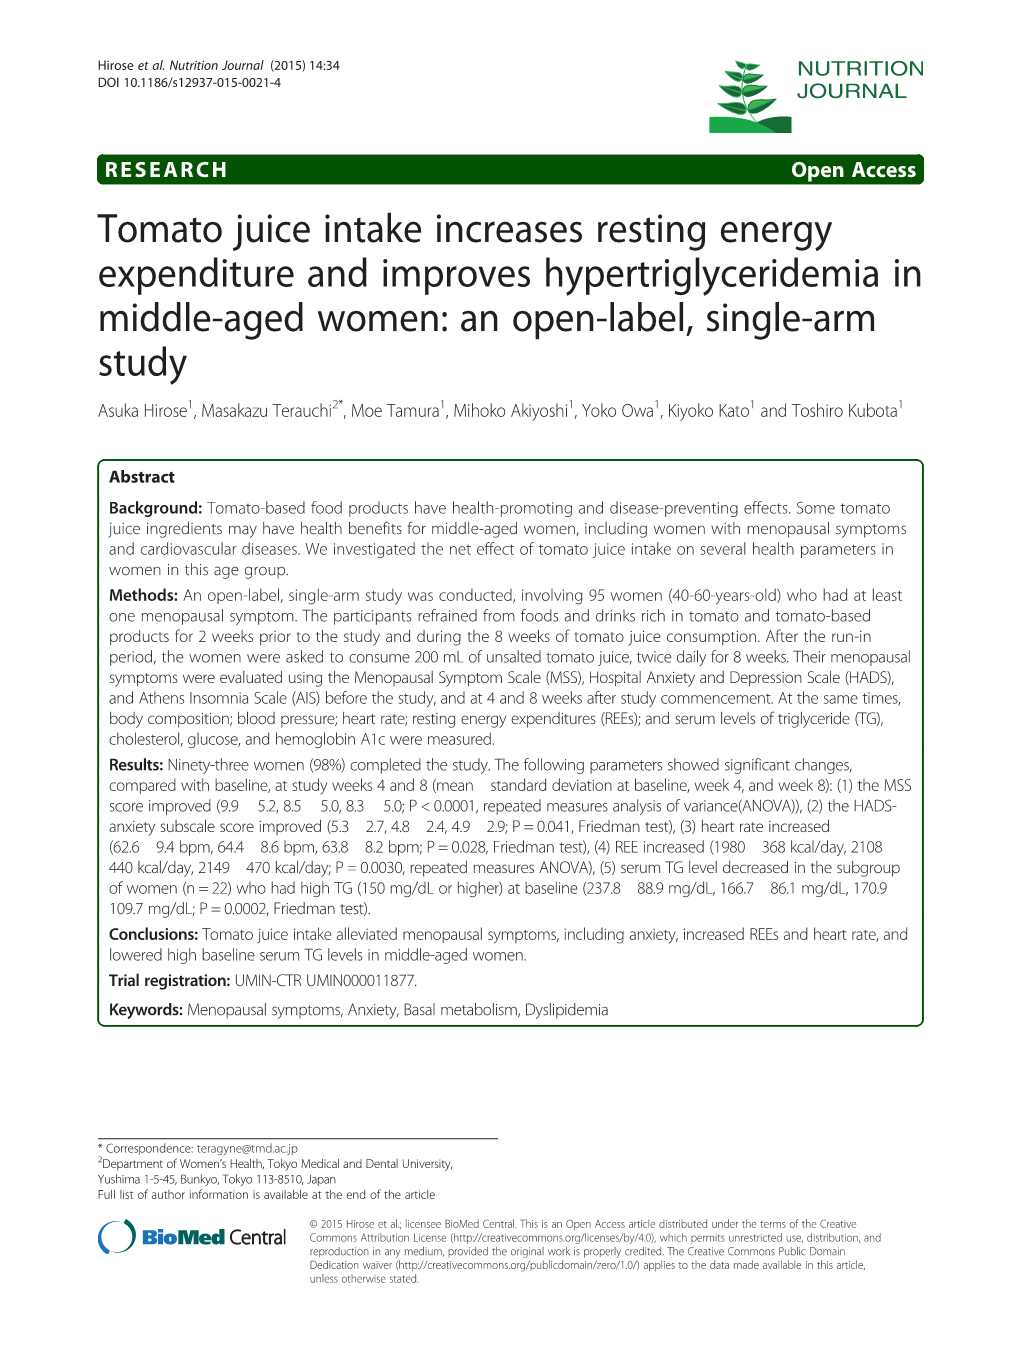 Tomato Juice Intake Increases Resting Energy